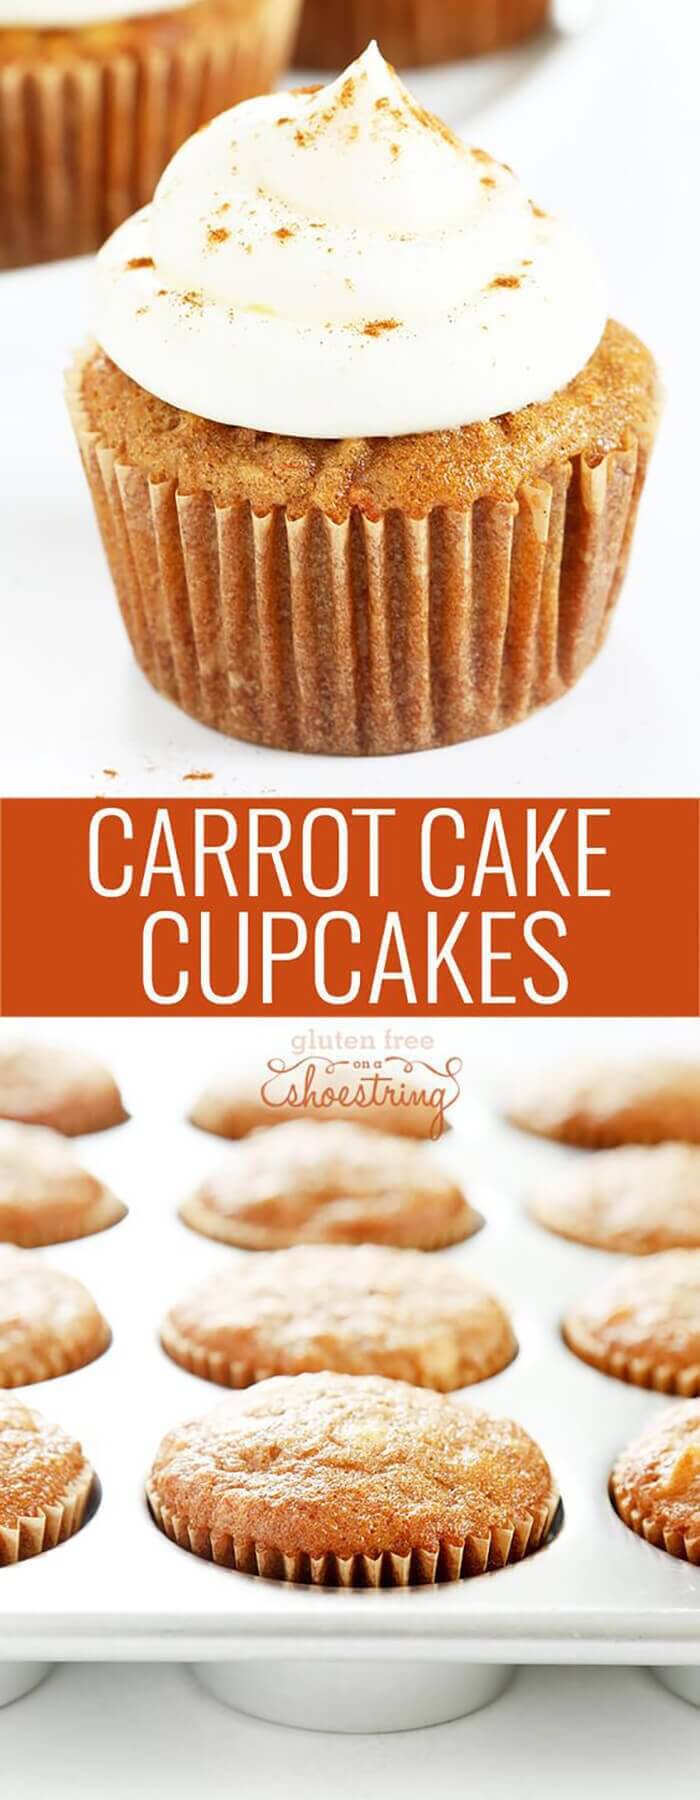 Gluten-free Carrot Cake Cupcakes